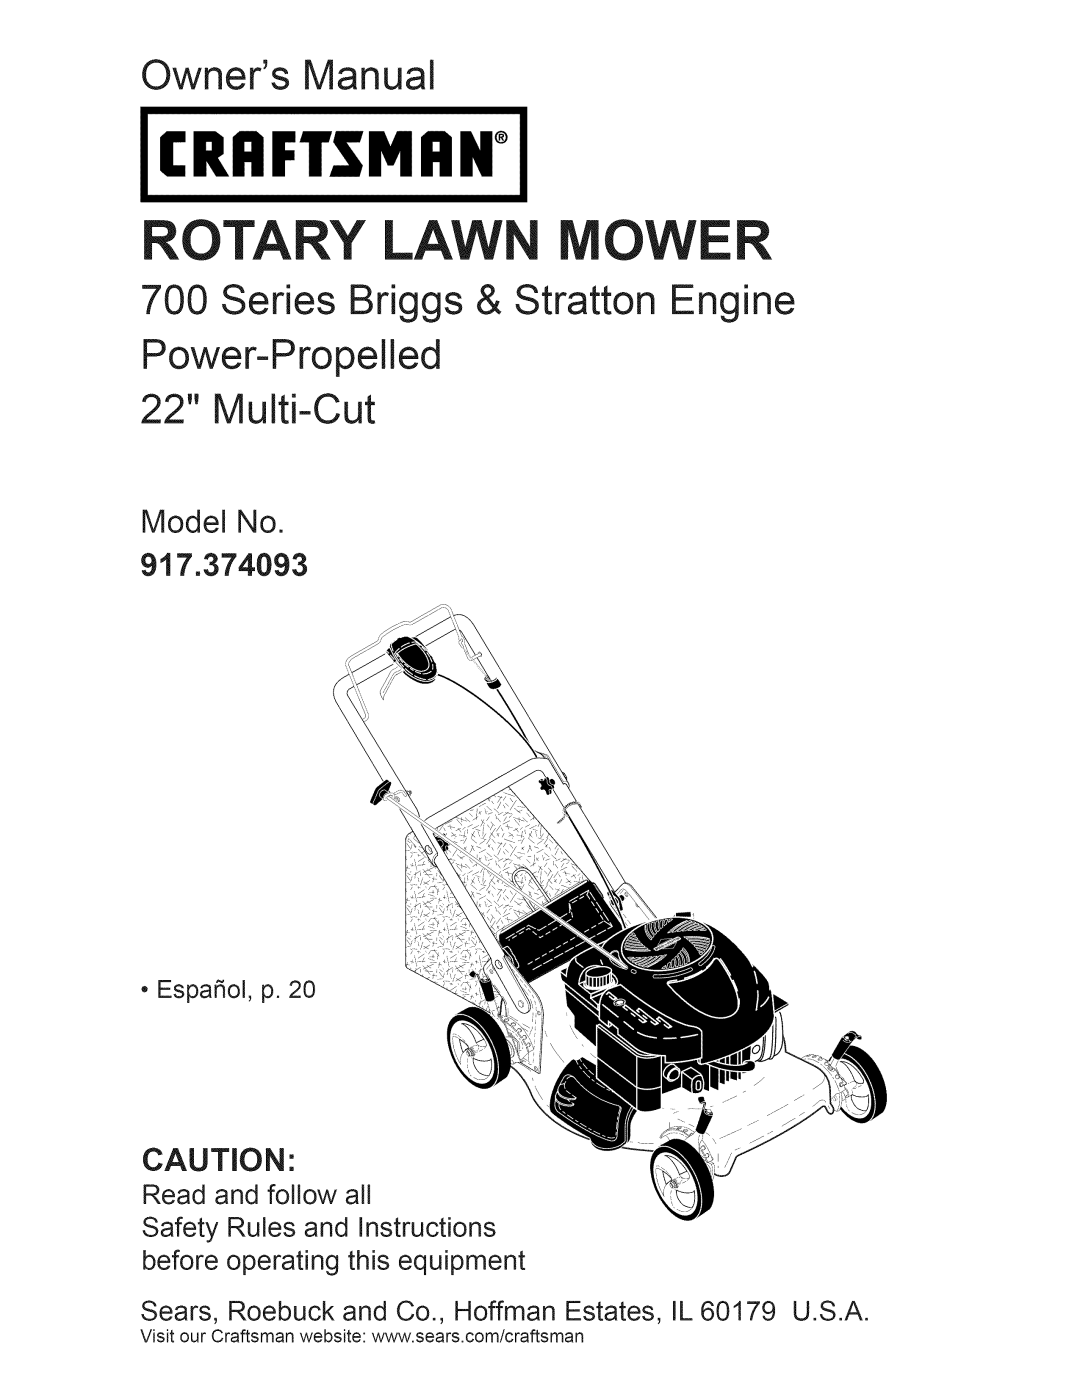 Craftsman owner manual Model No 917.374093, Craftsman, Rotary Lawn Mower, Series Briggs & Stratton Engine 